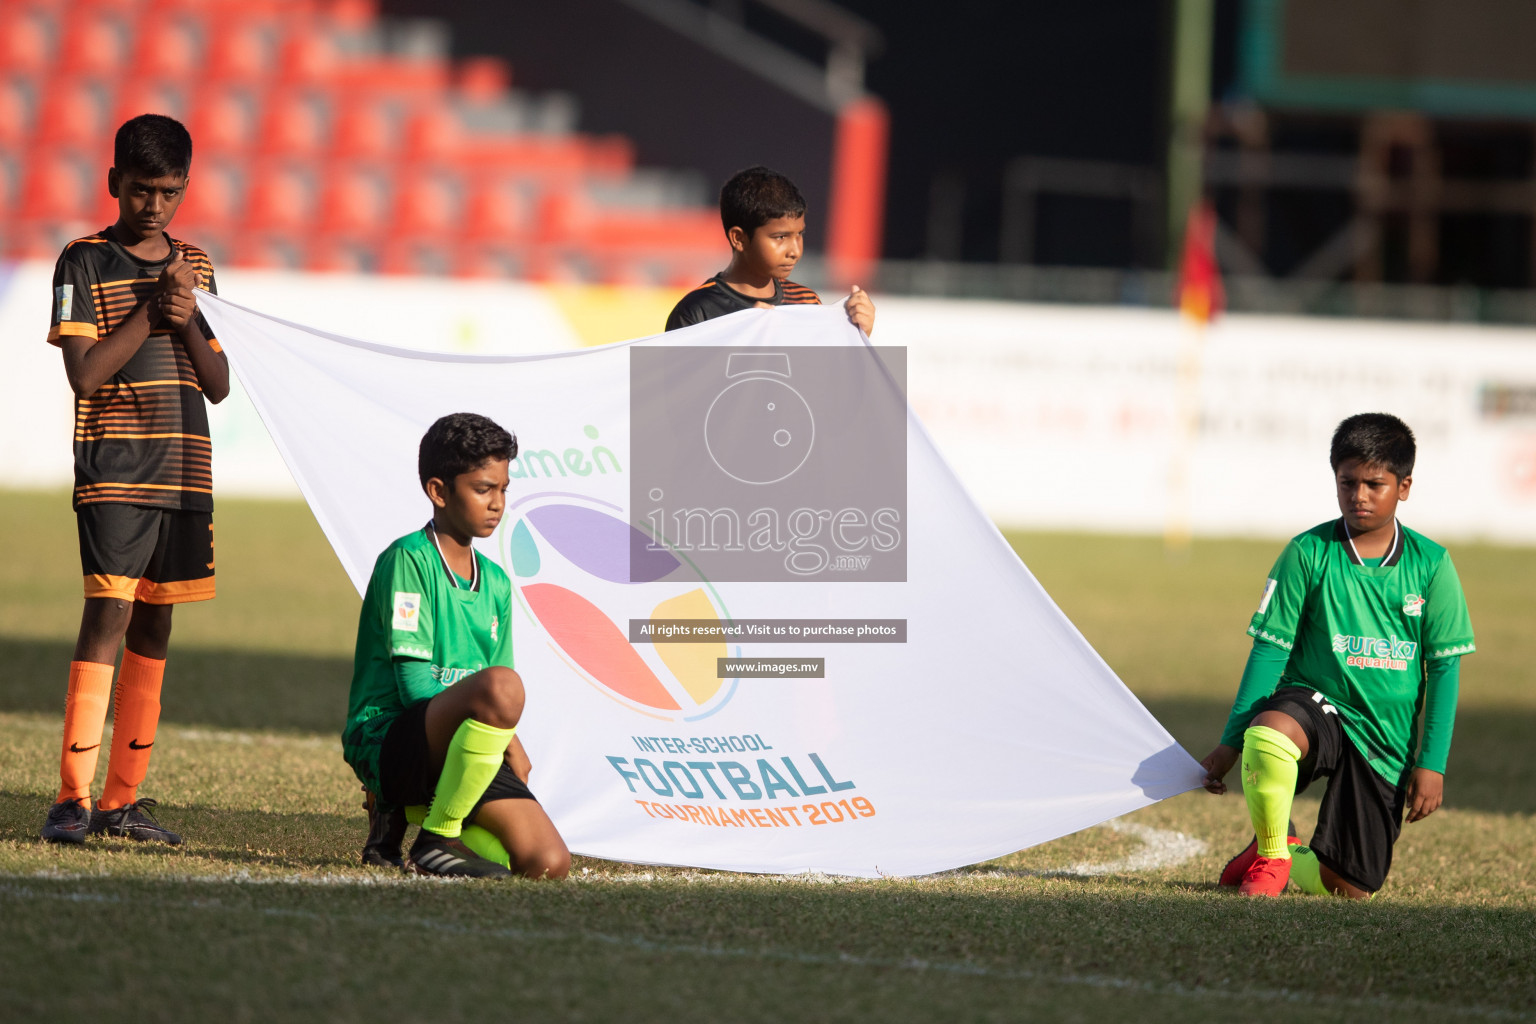 Imaduddin School vs Kalaafaanu School in MAMEN Inter School Football Tournament 2019 (U13) in Male, Maldives on 31st March 2019, Photos: Hassan Simah / images.mv